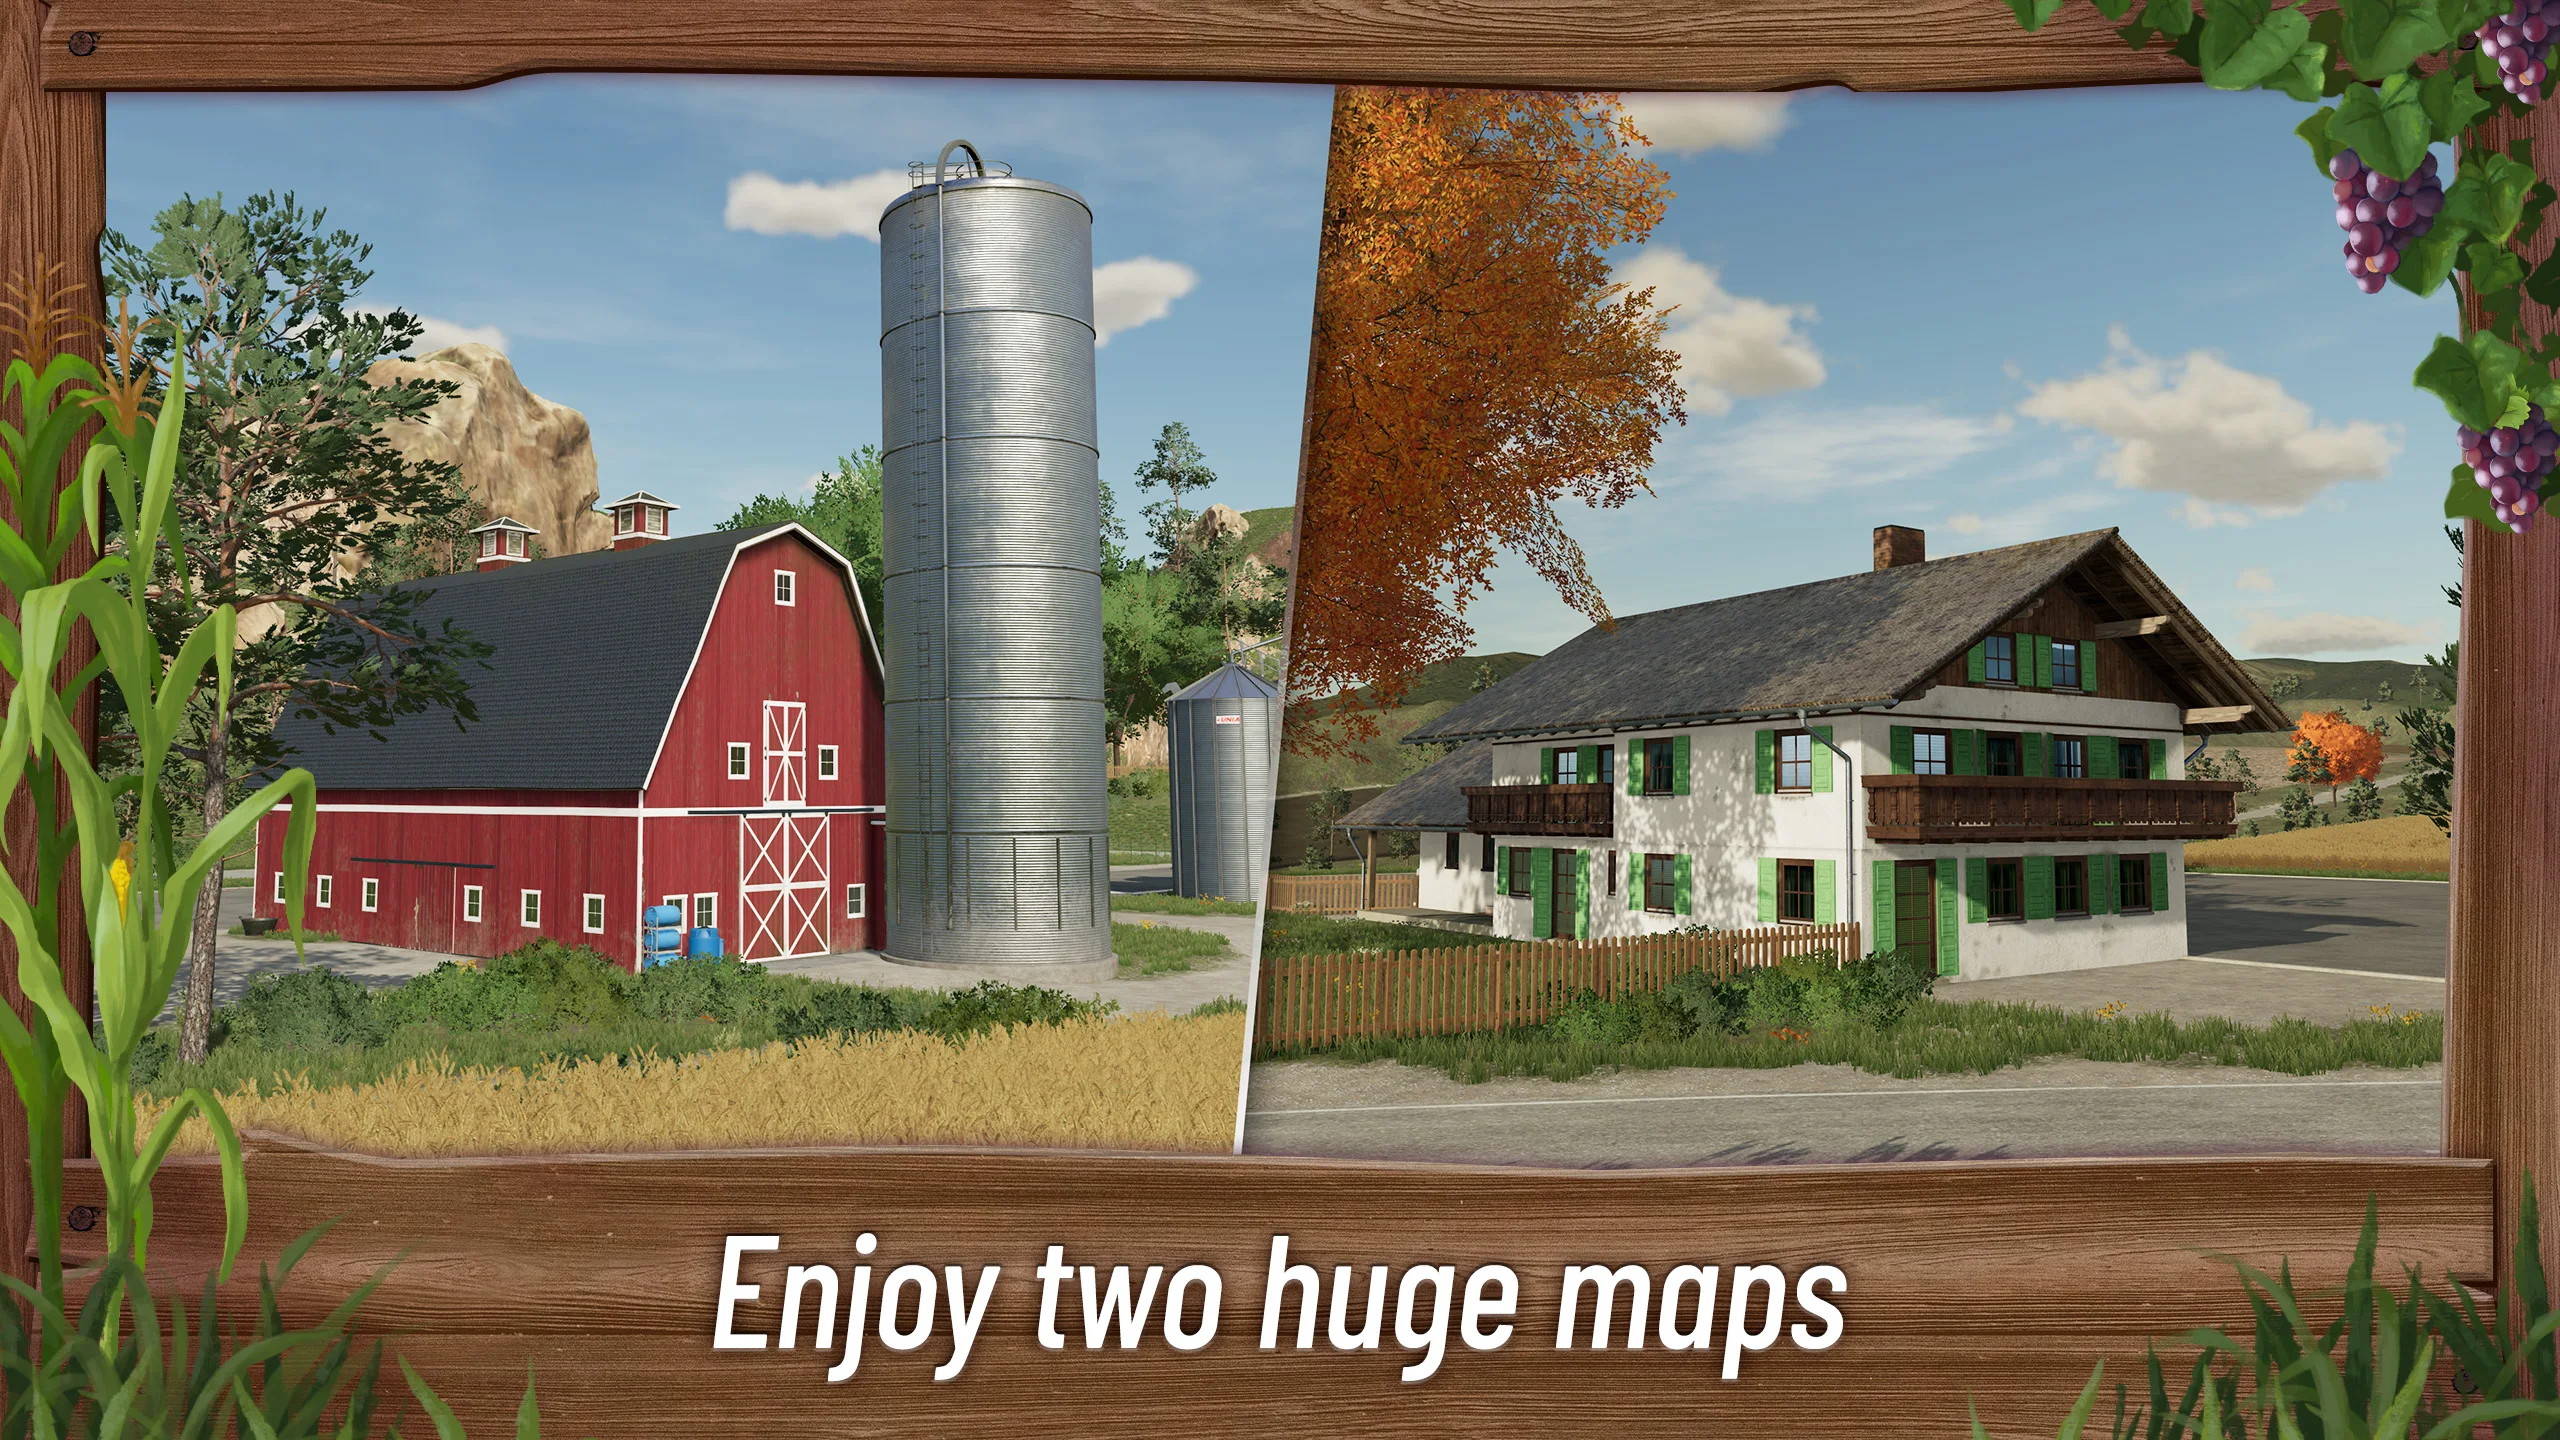 Ranch Simulator - Farming life in multiplayer